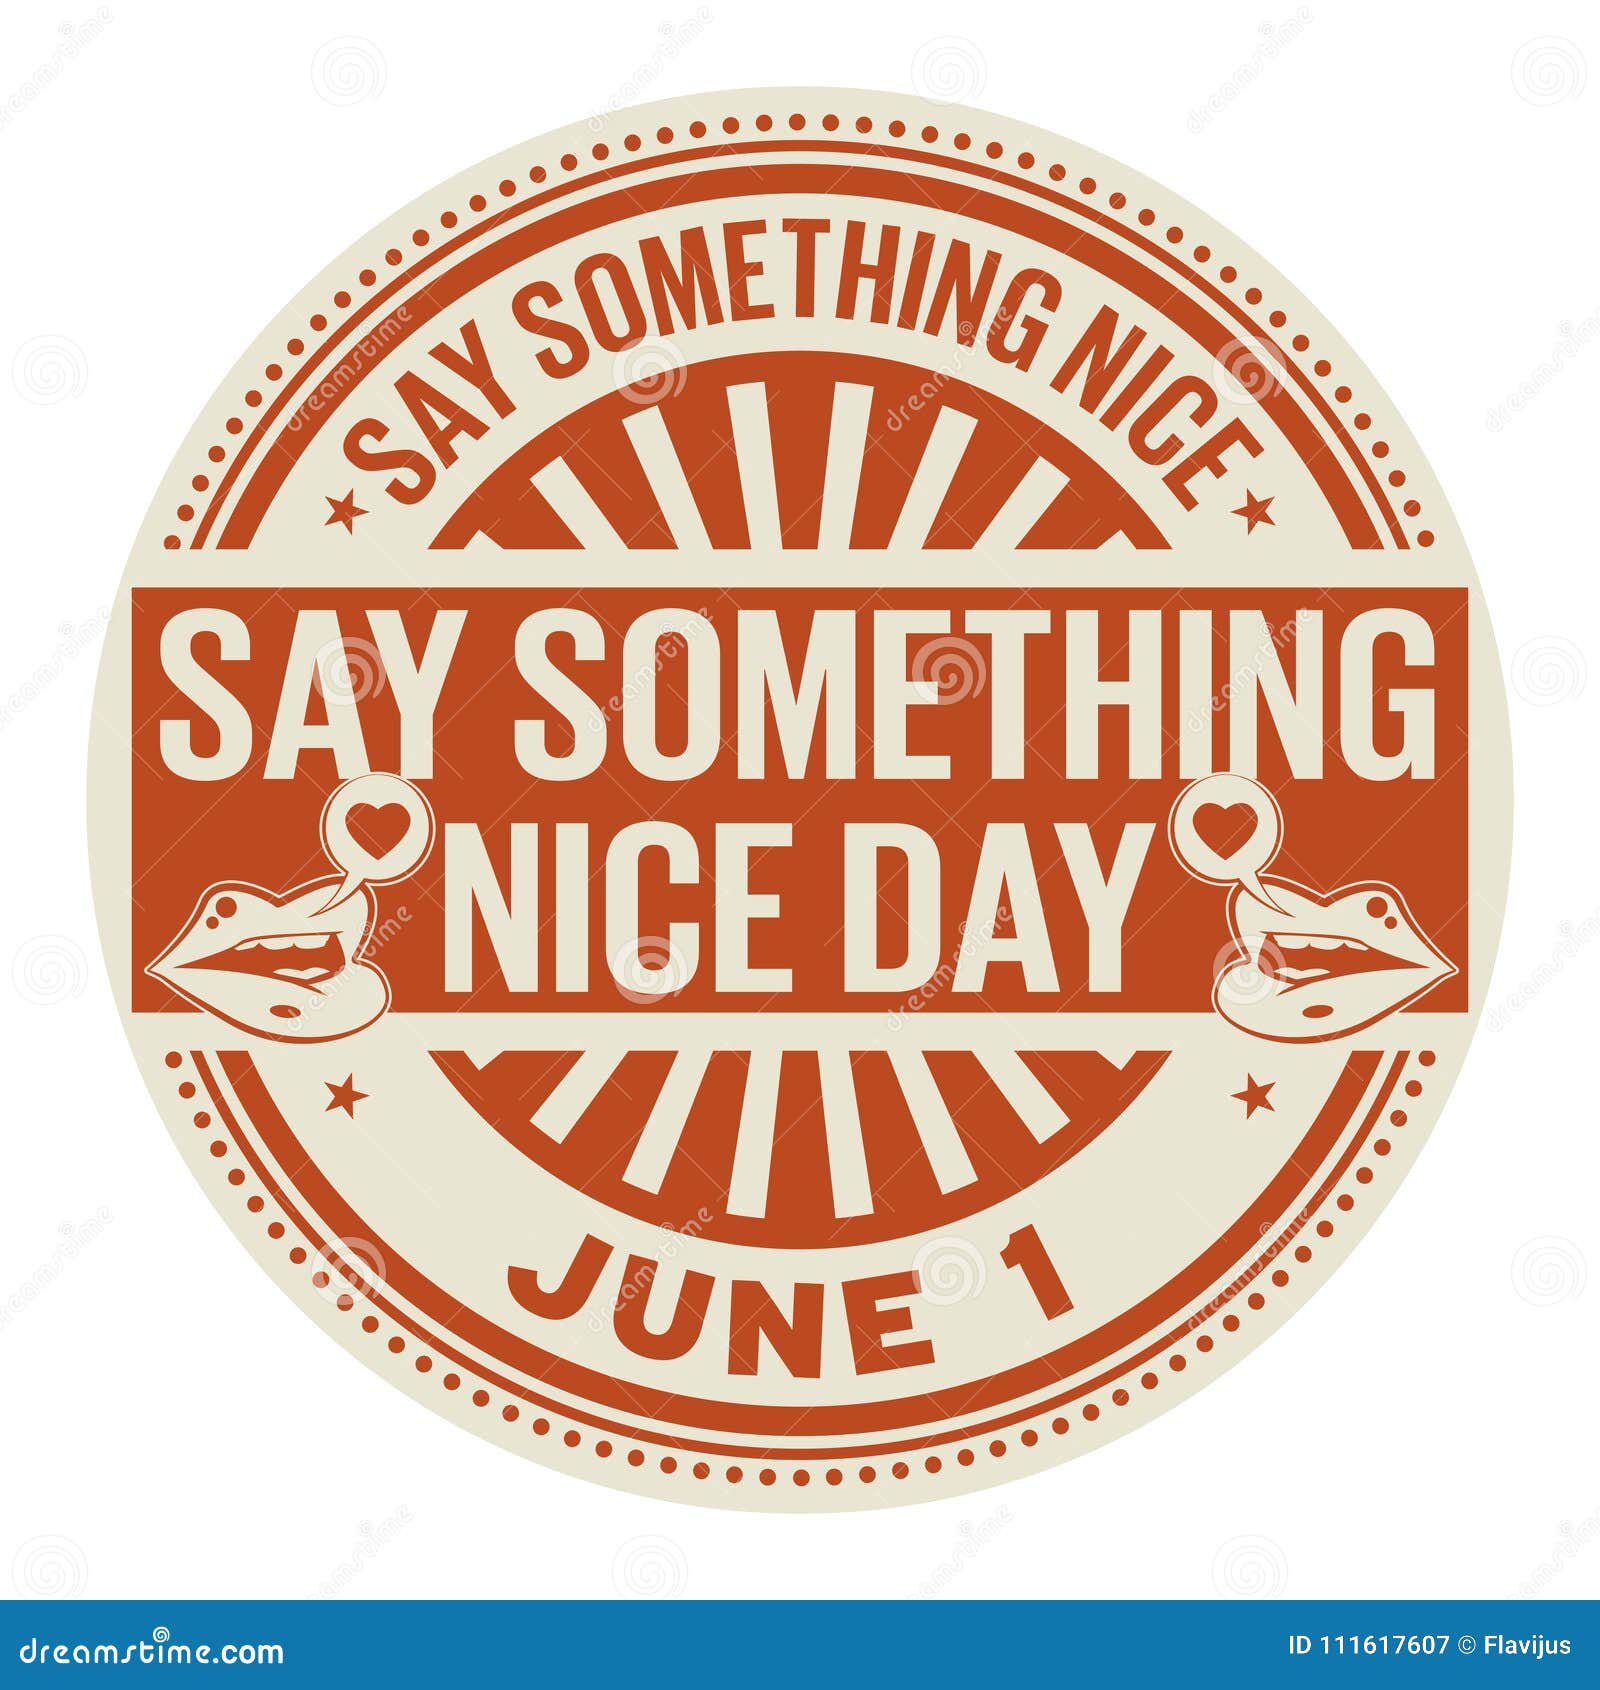 say something nice day